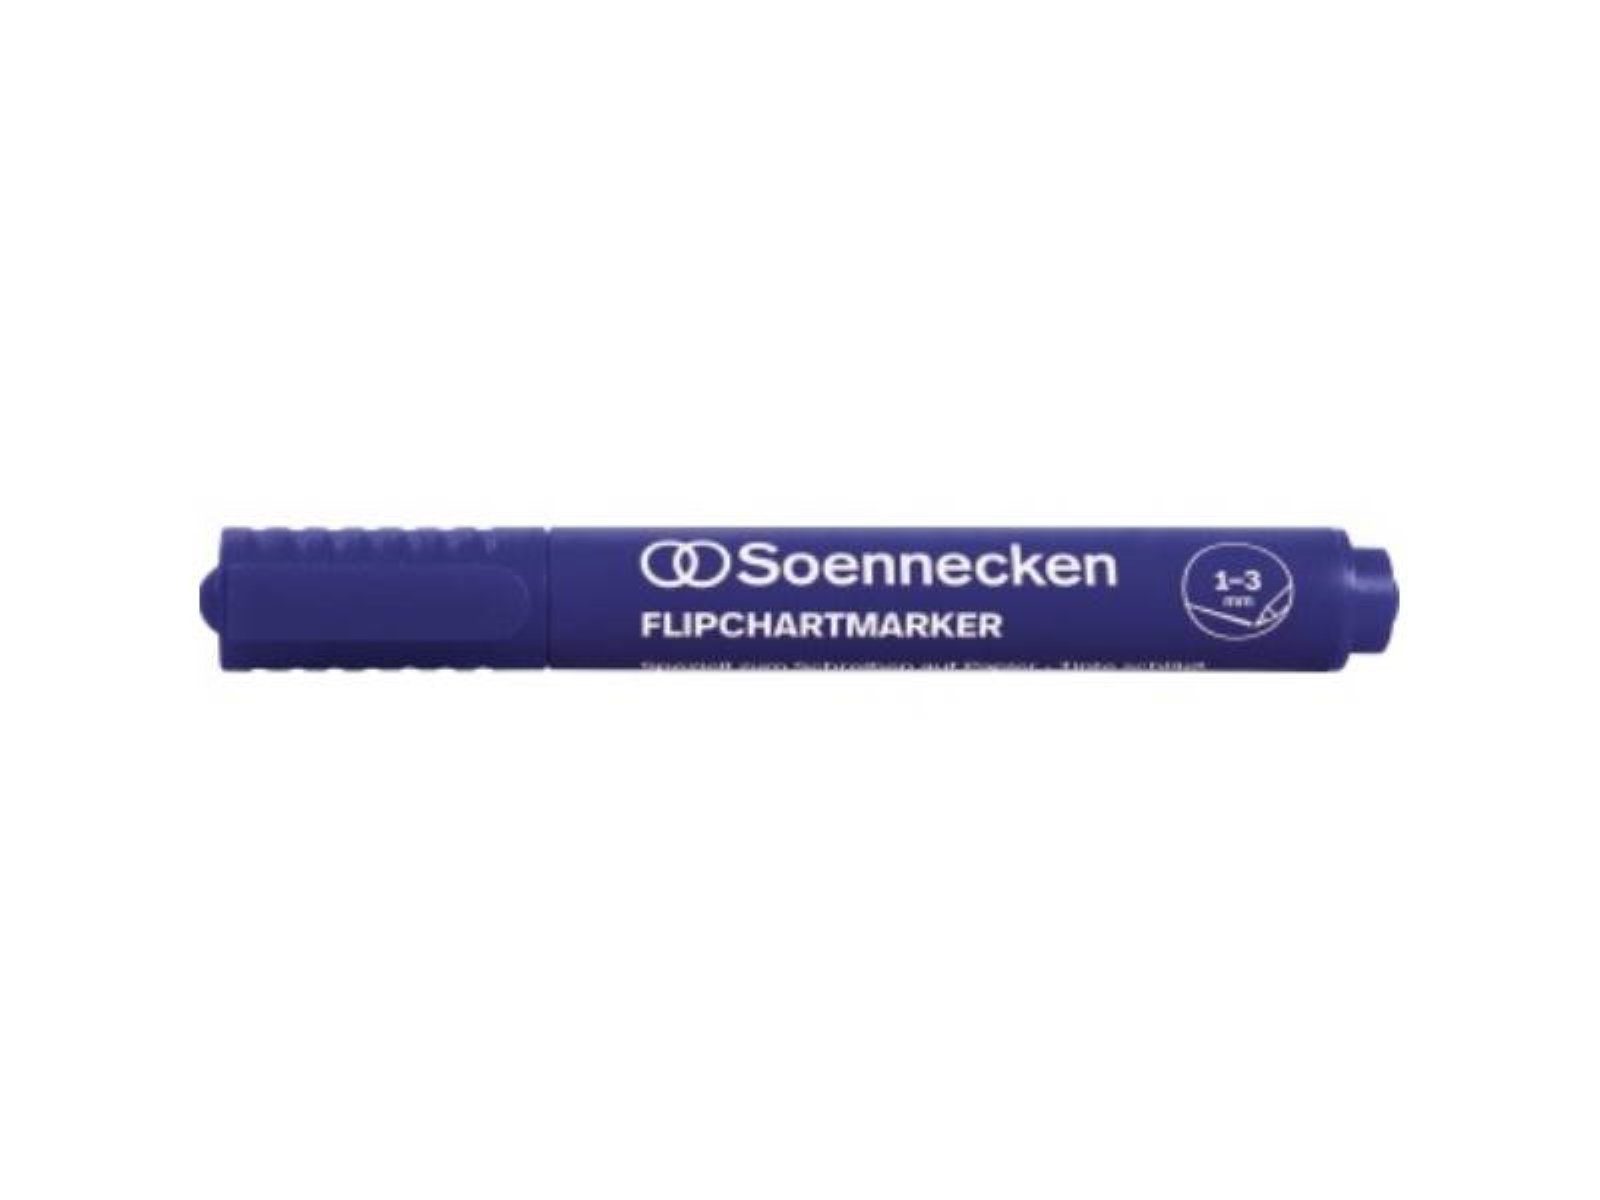 SOENNECKEN Fl Marker Soennecken Soennecken Flipchartmarker 1-3mm blau Soennecken 3076